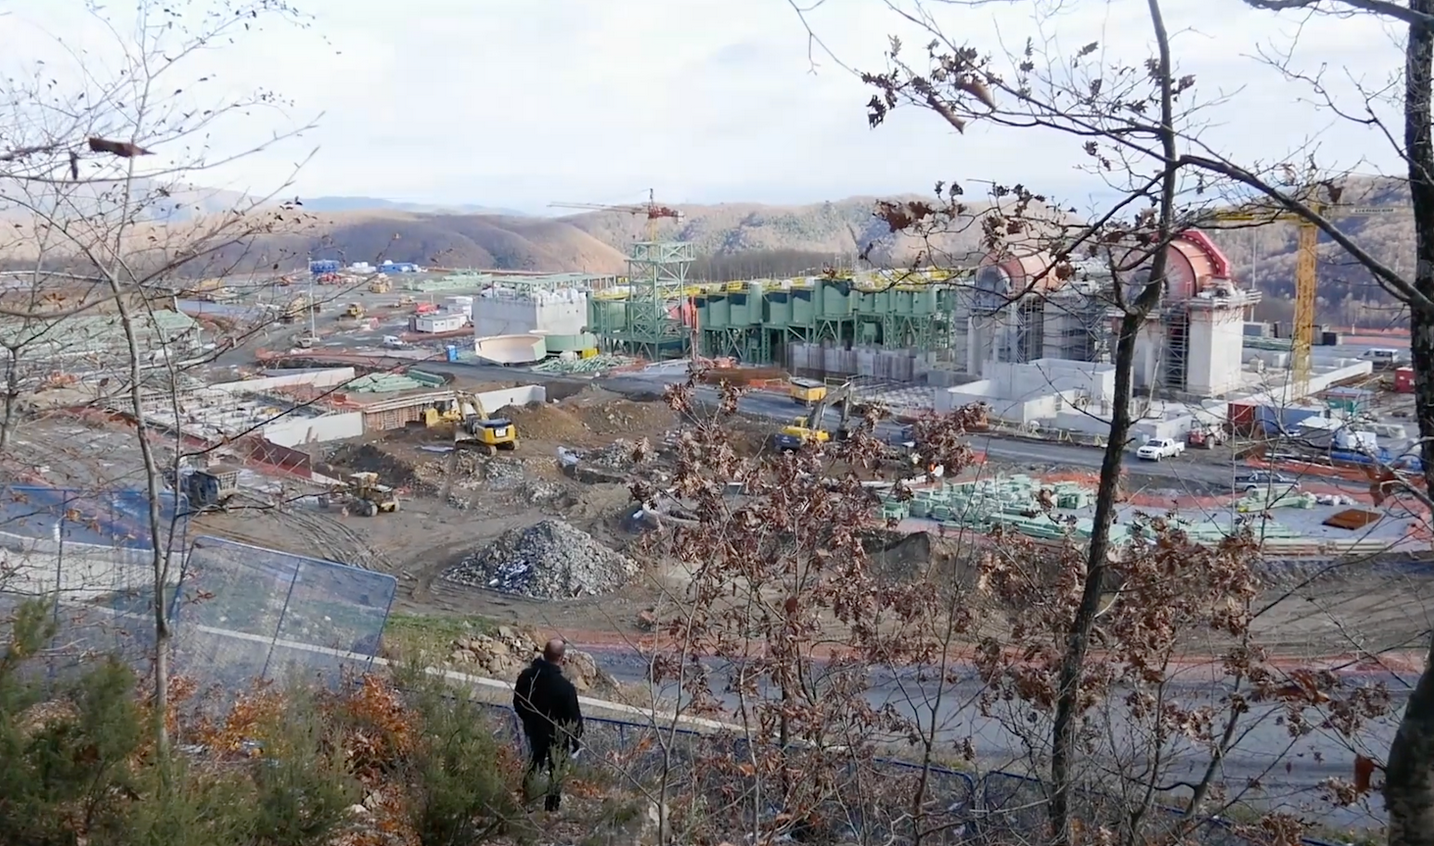 View of Greek mine site